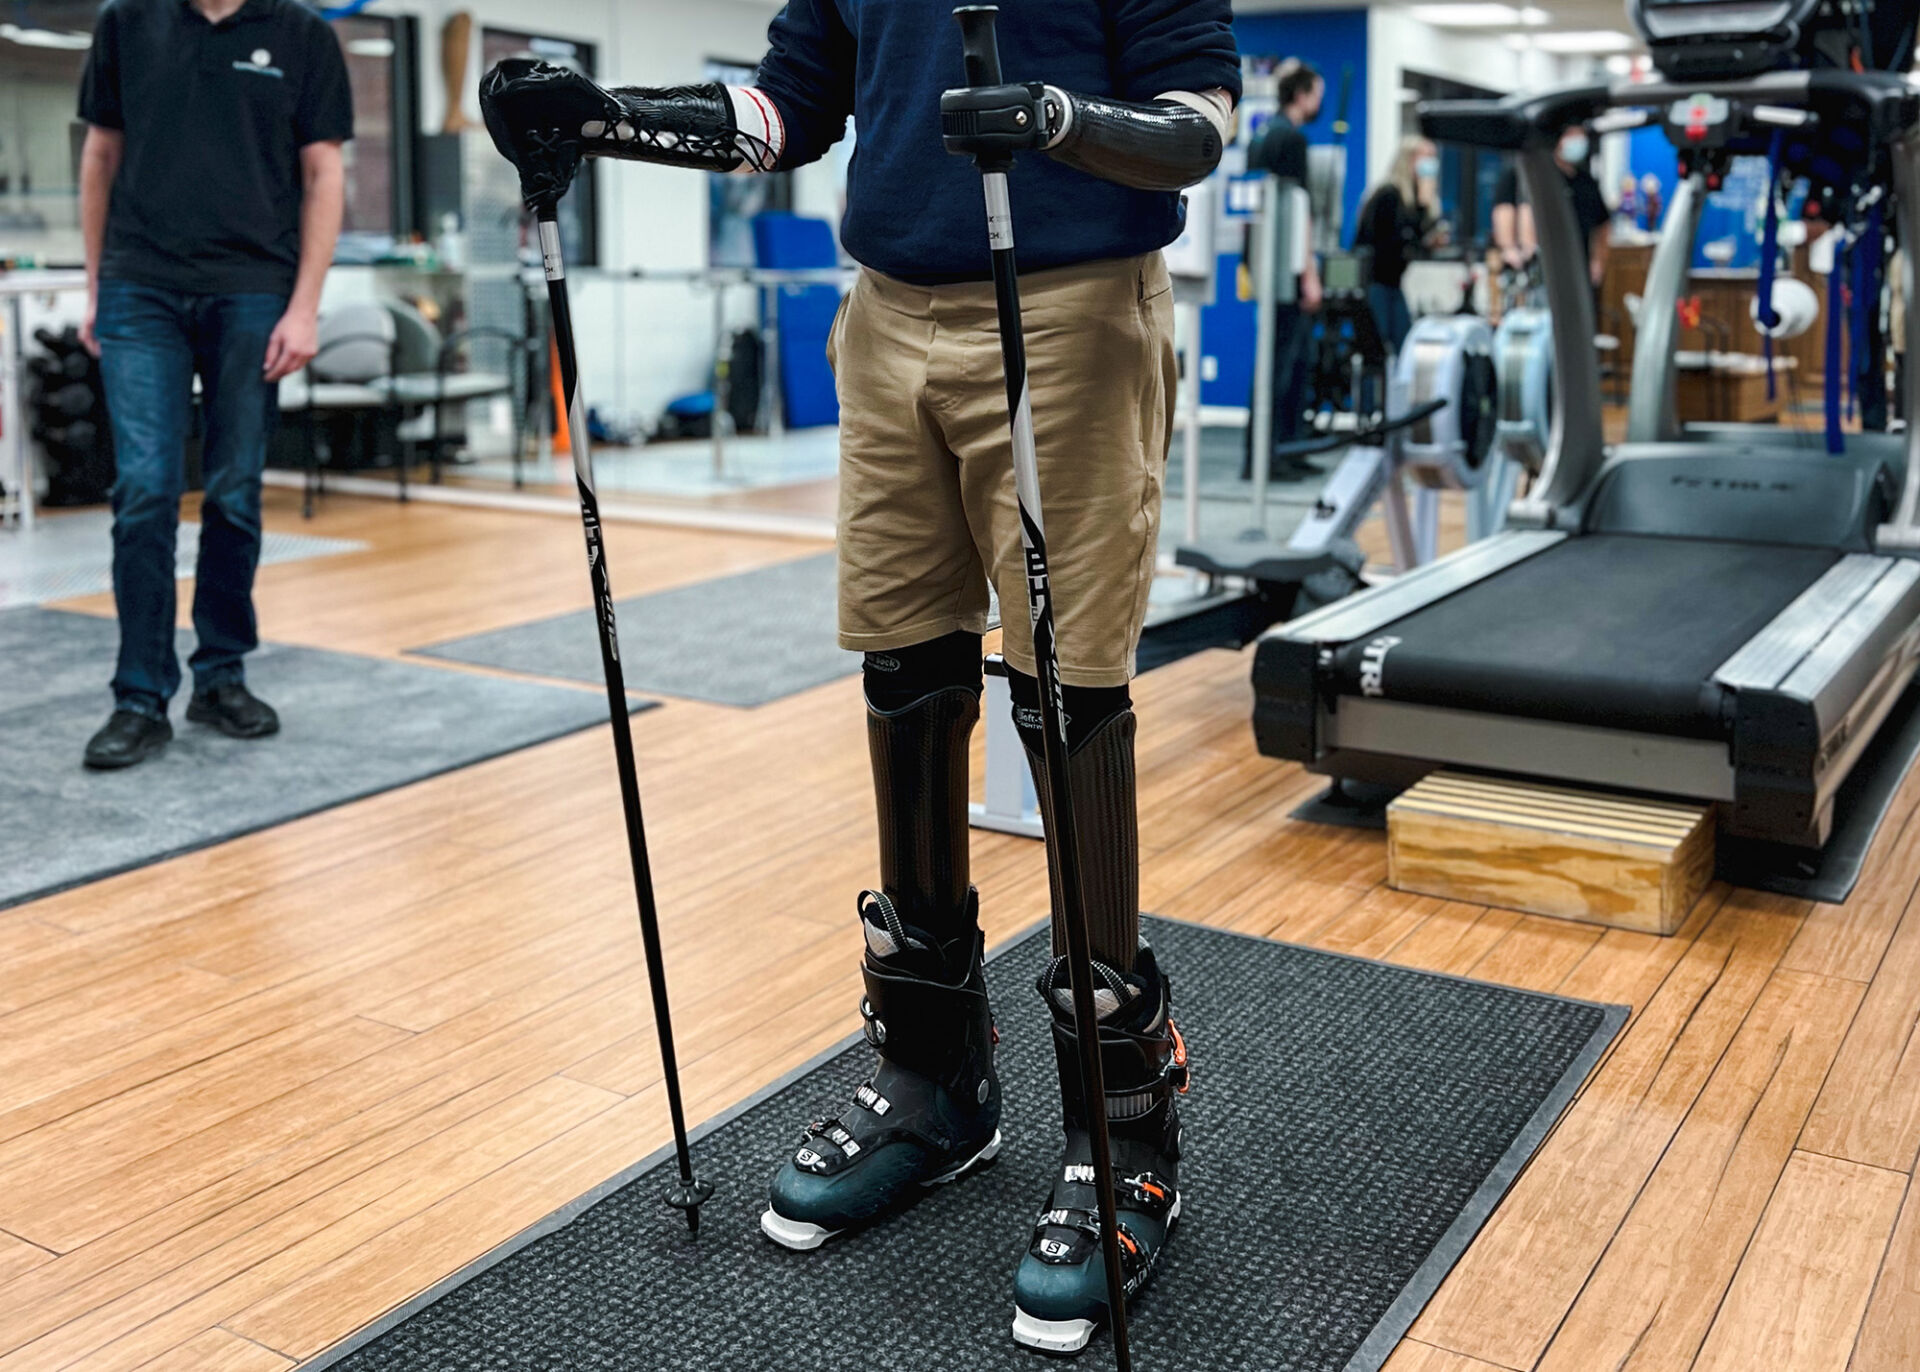 bilateral Below knee amputee in custom skiing prosthetics.